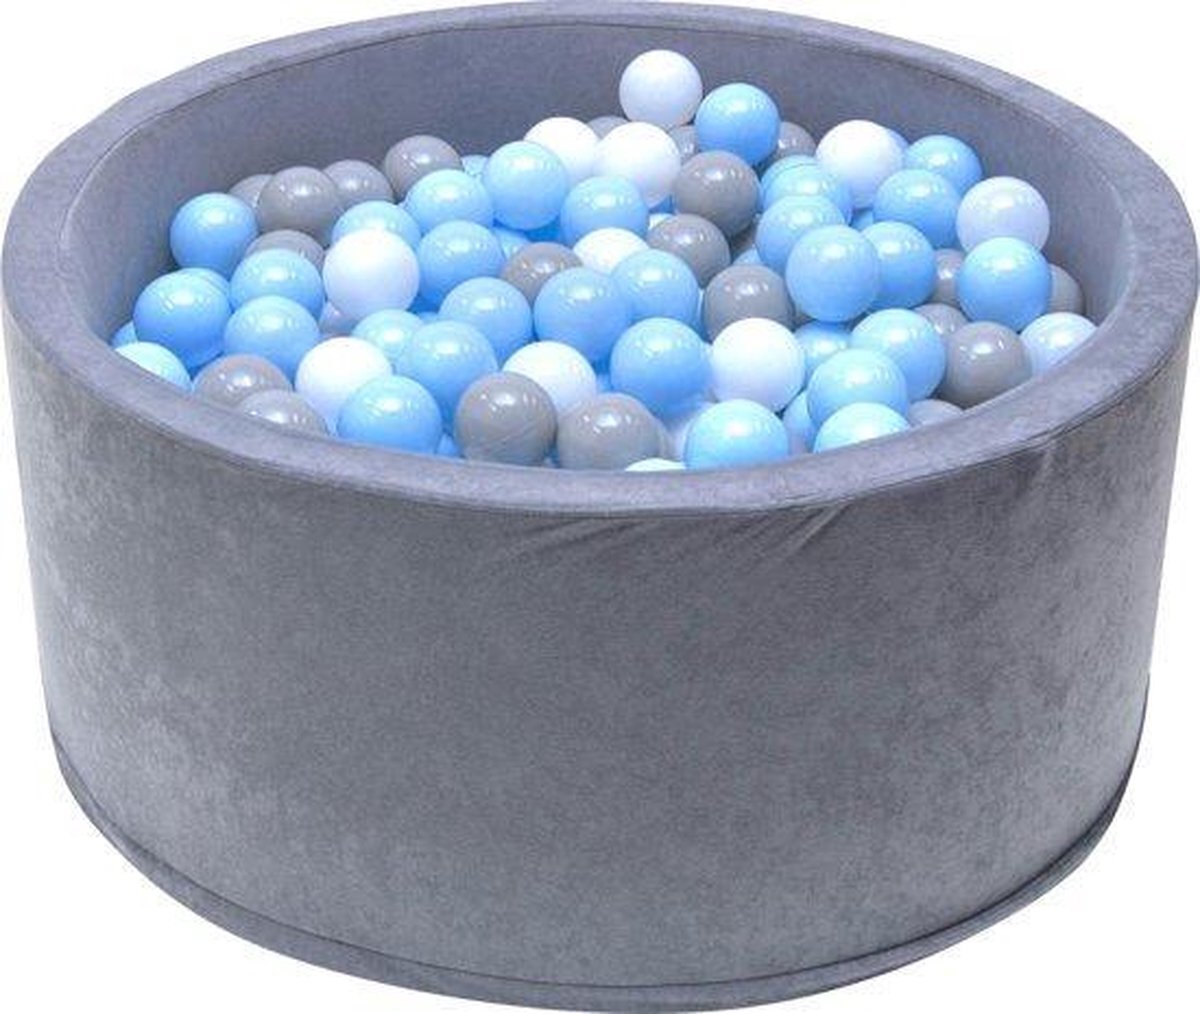 Viking Choice Ballenbak - stevige grijze ballenbad - 90 x 40 cm - 400 ballen Ø 7 cm - blauw, wit, grijs